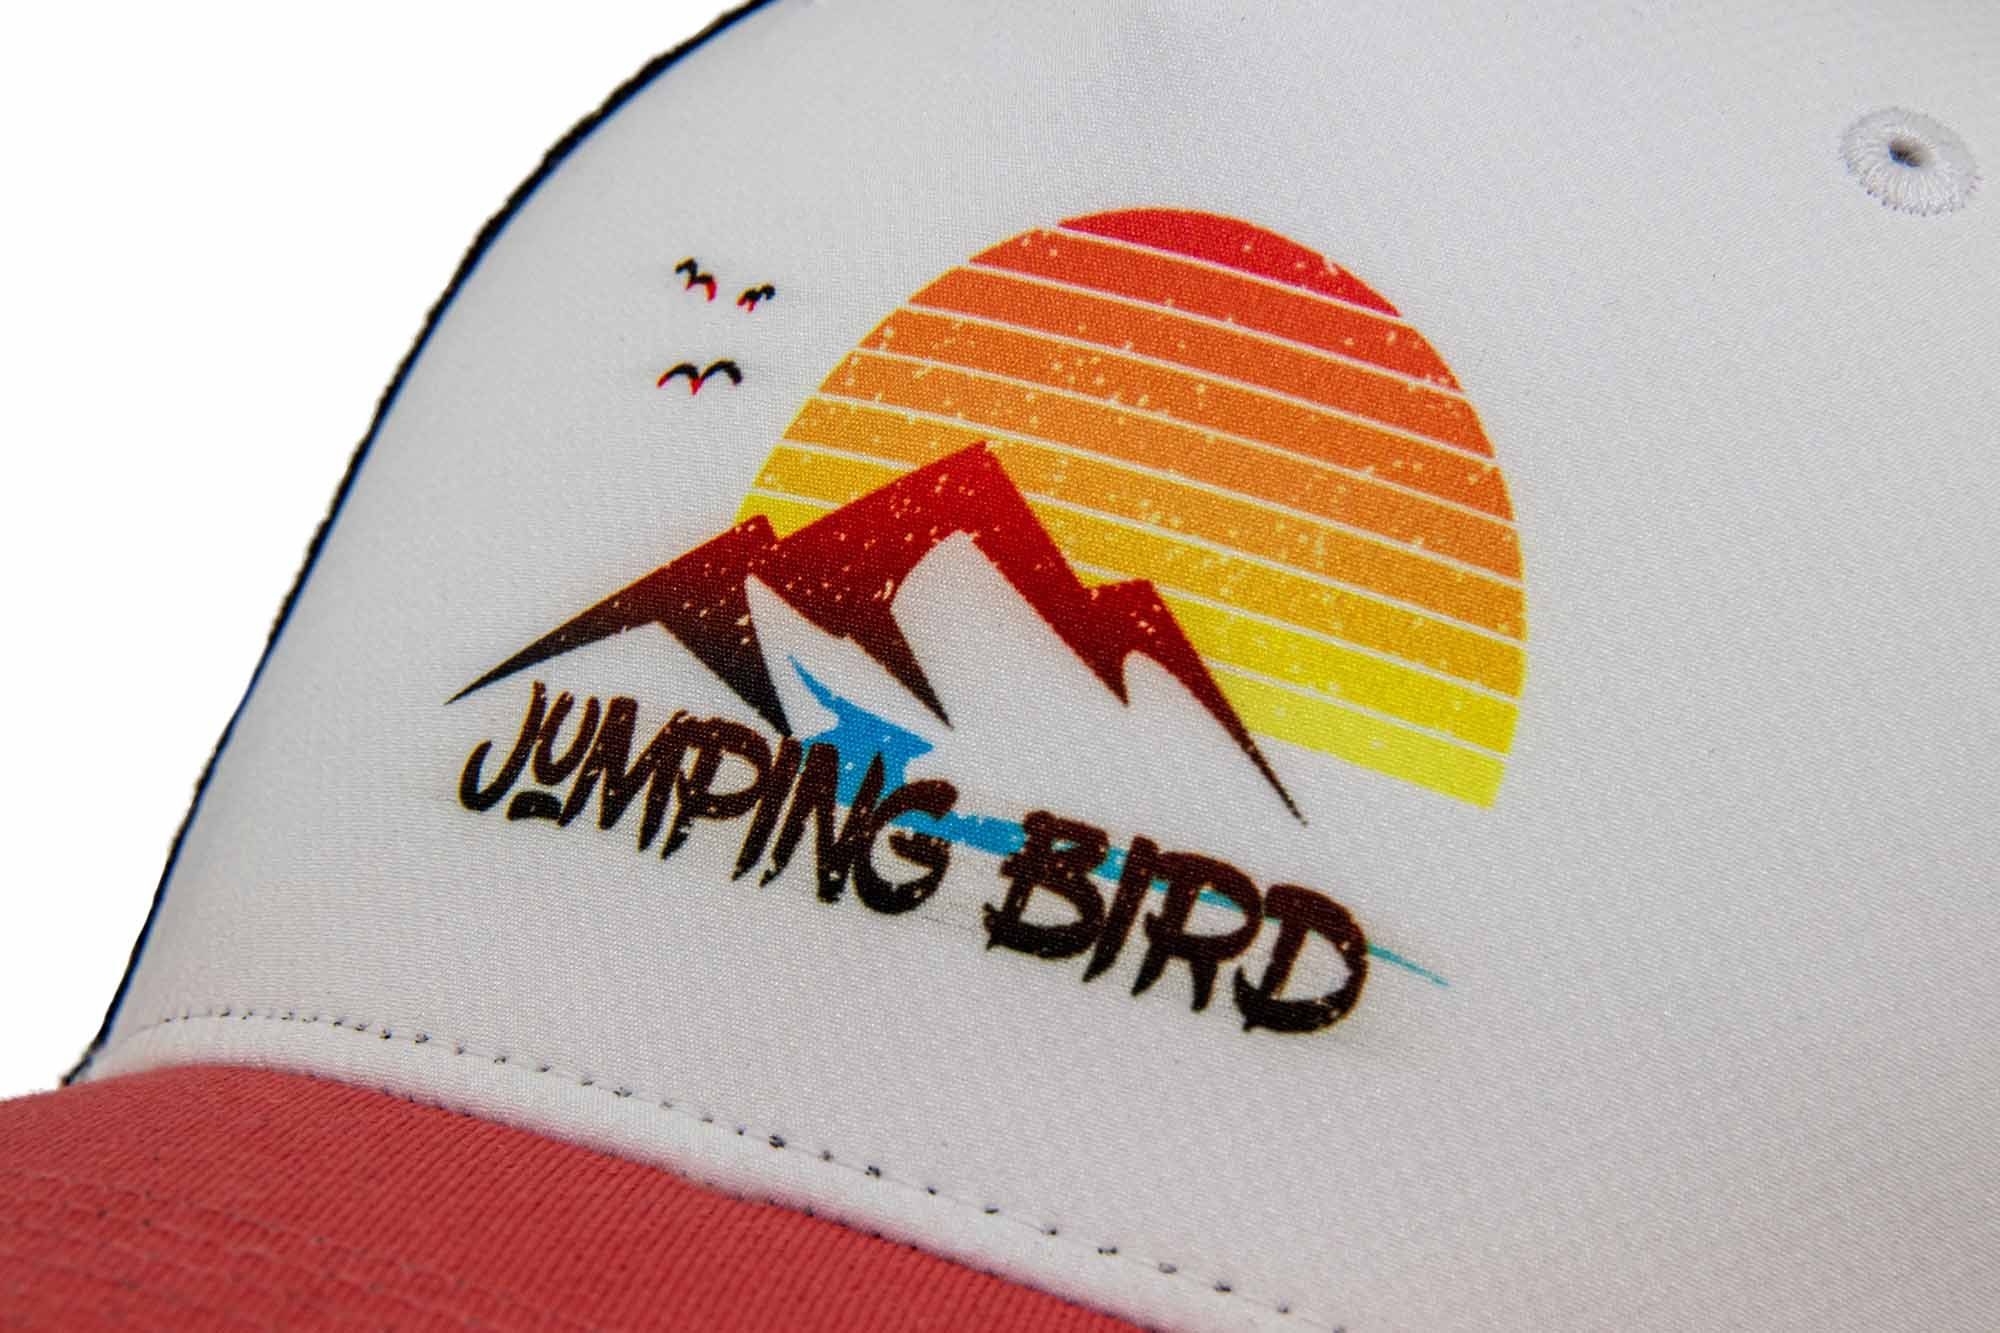 Jumping Bird Trucker Koralle Cap